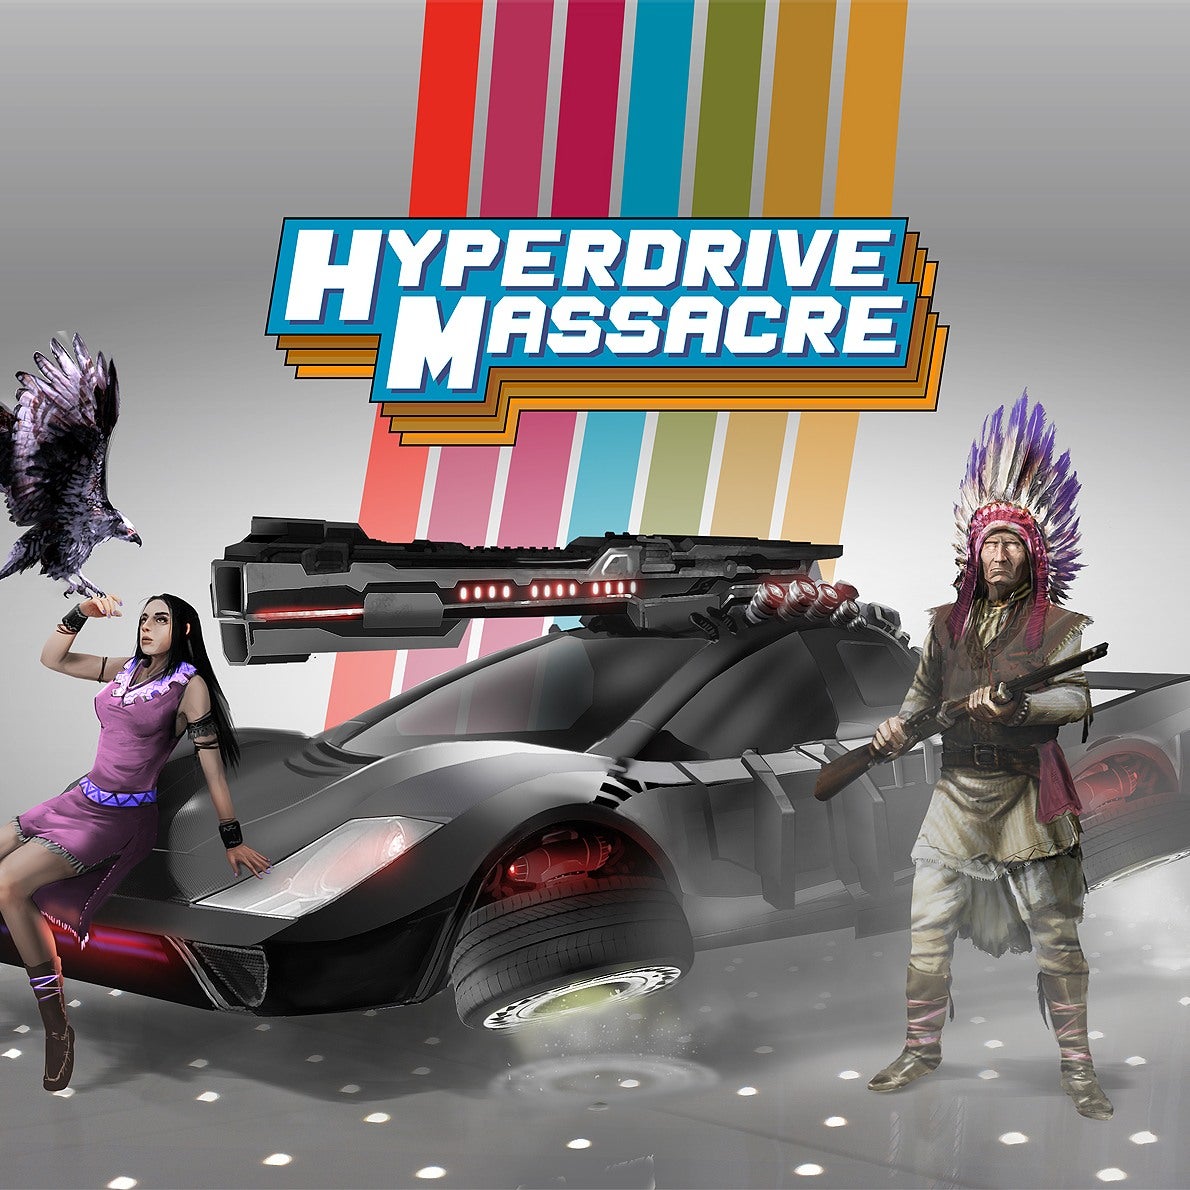 Hyperdrive Massacre [Images]